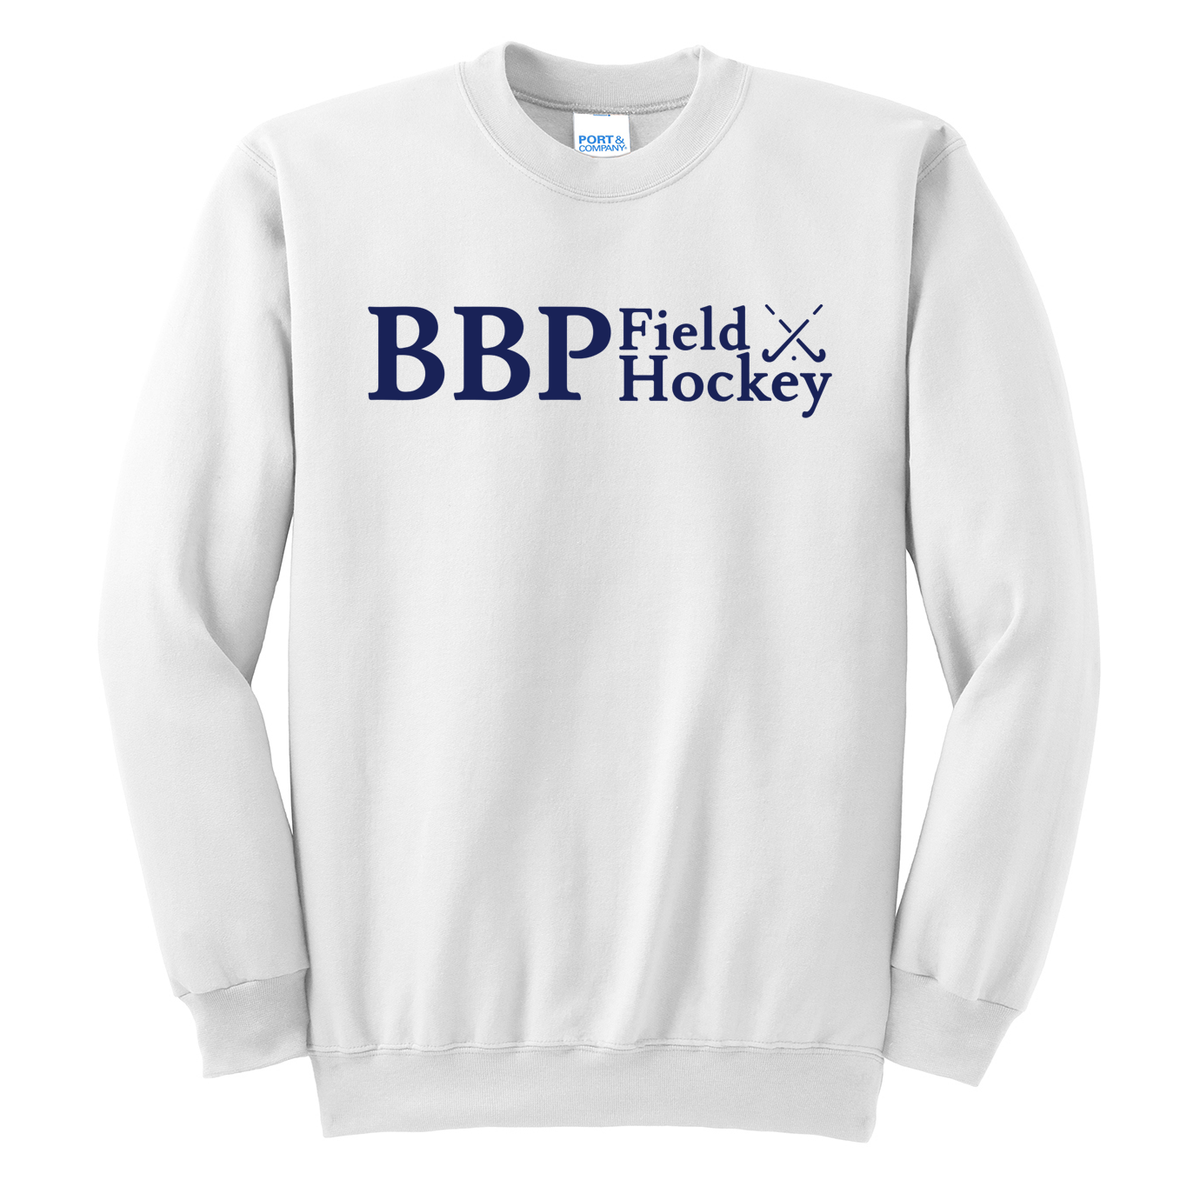 BBP Field Hockey Crew Neck Sweater